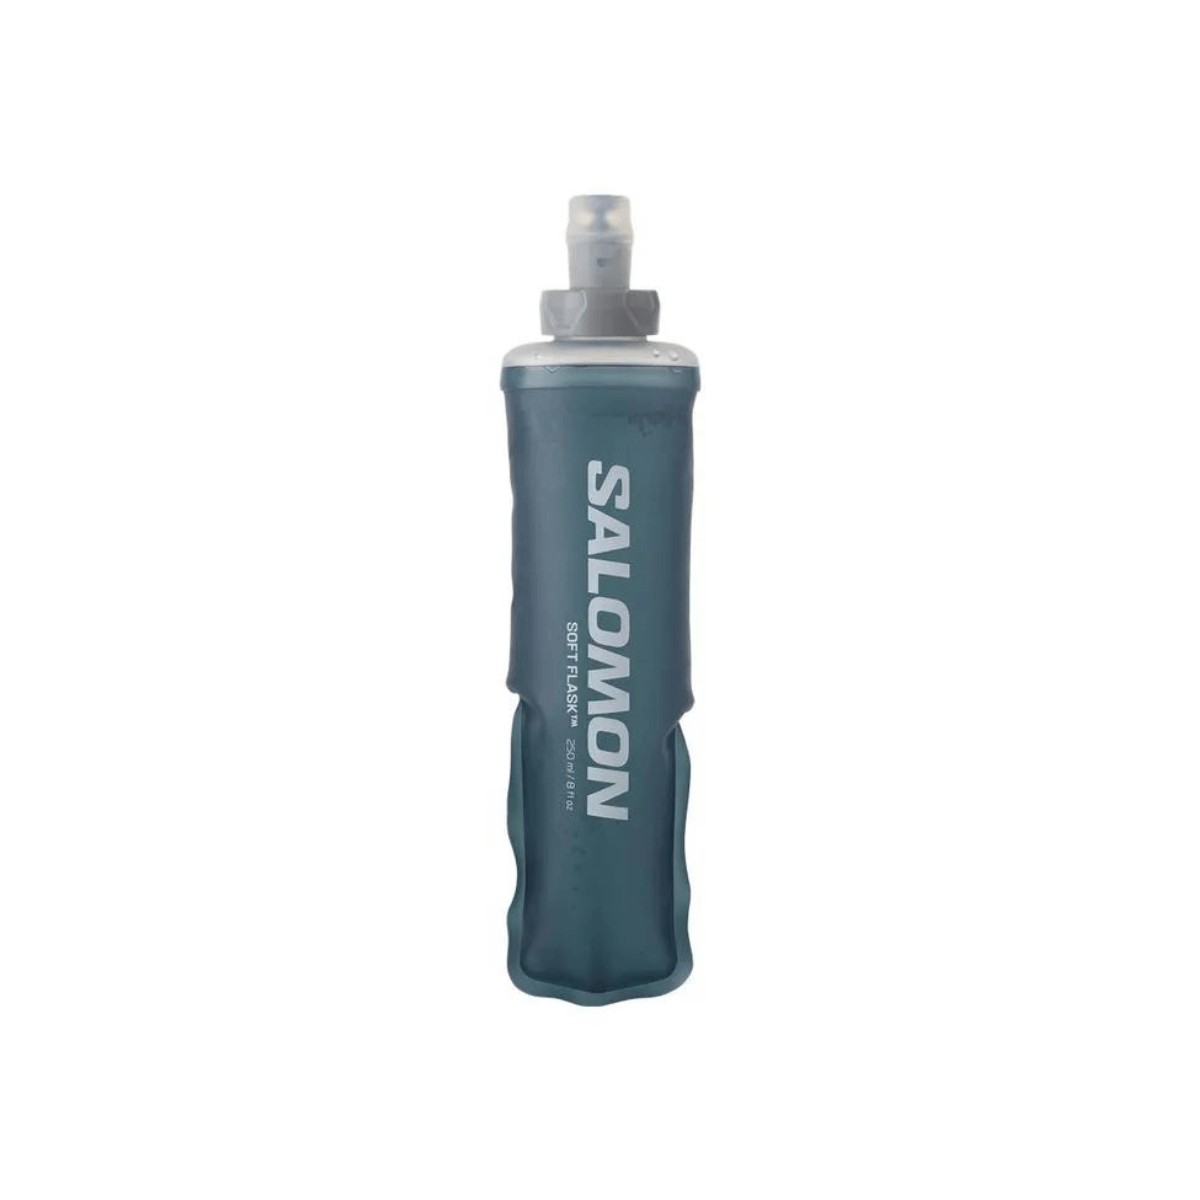 Salomon Soft Flask 250Ml/8oz graue Flasche